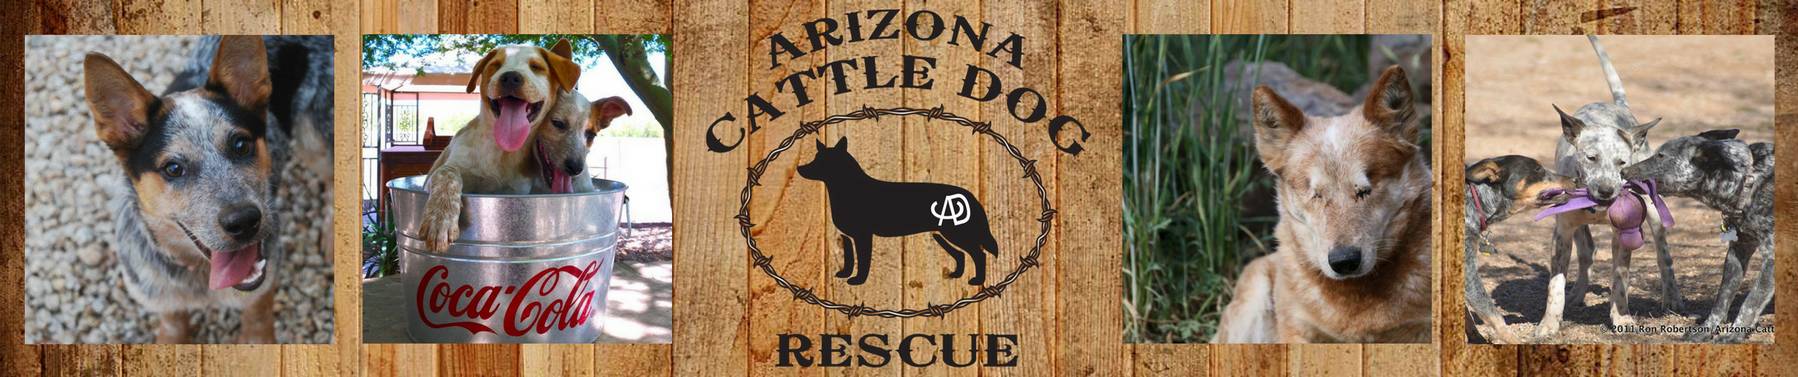 arizona cattle dog rescue